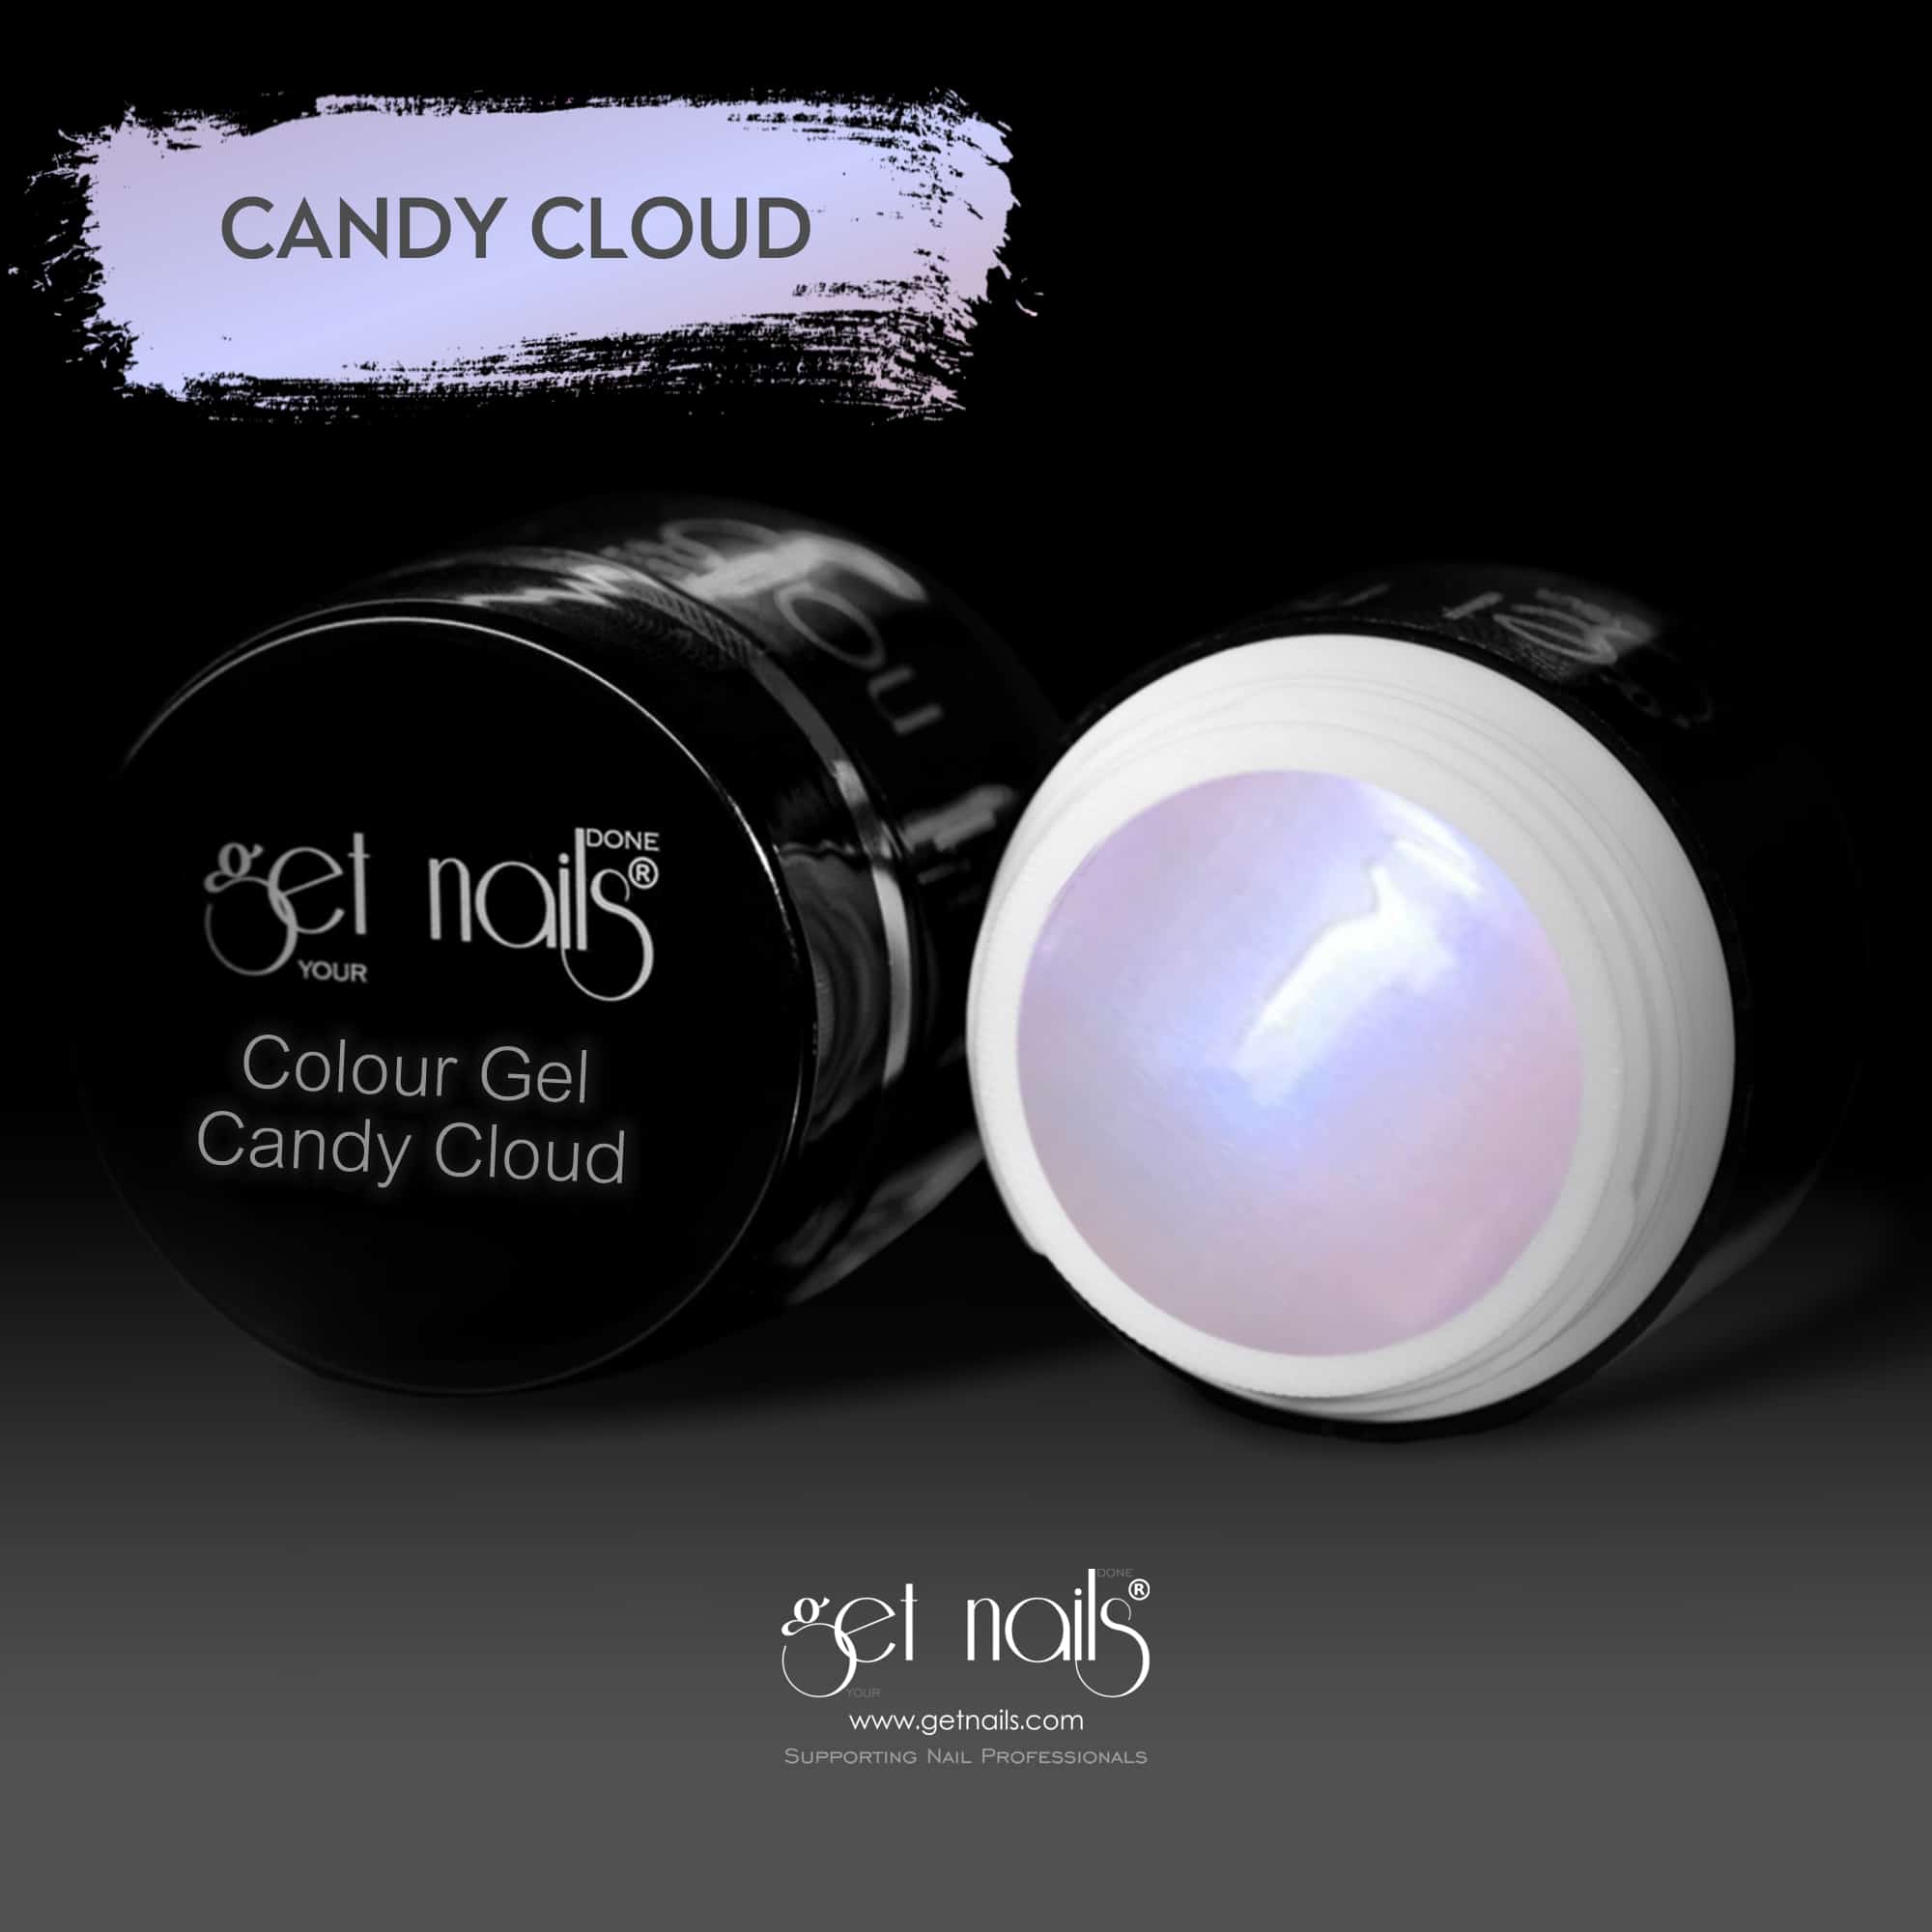 Get Nails Austria - Цветной гель Candy Cloud 5g